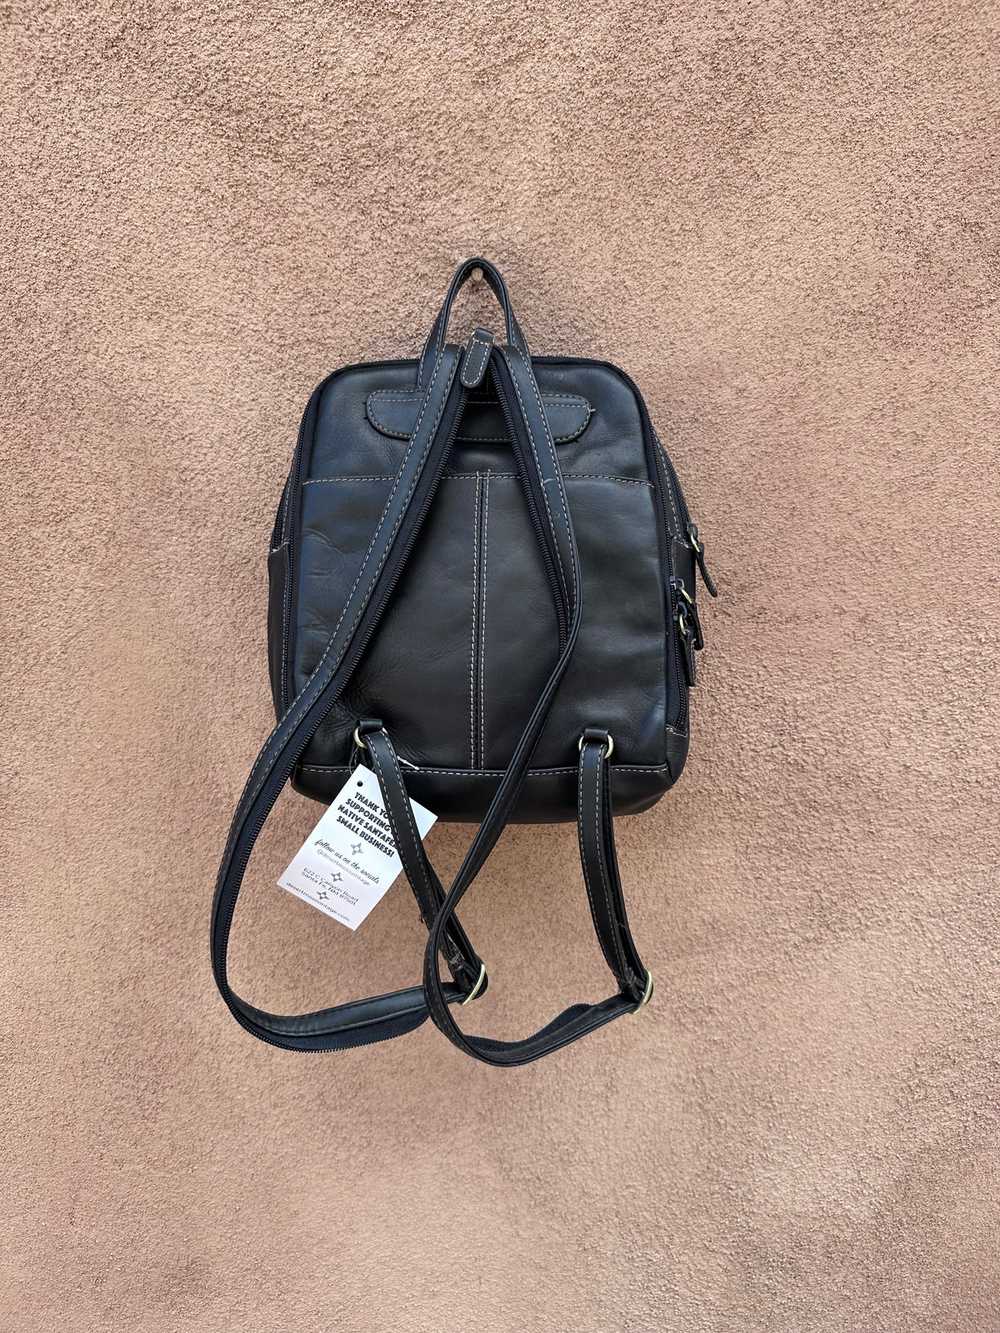 90's Black Leather Backpack/Purse - Multipocket - image 2